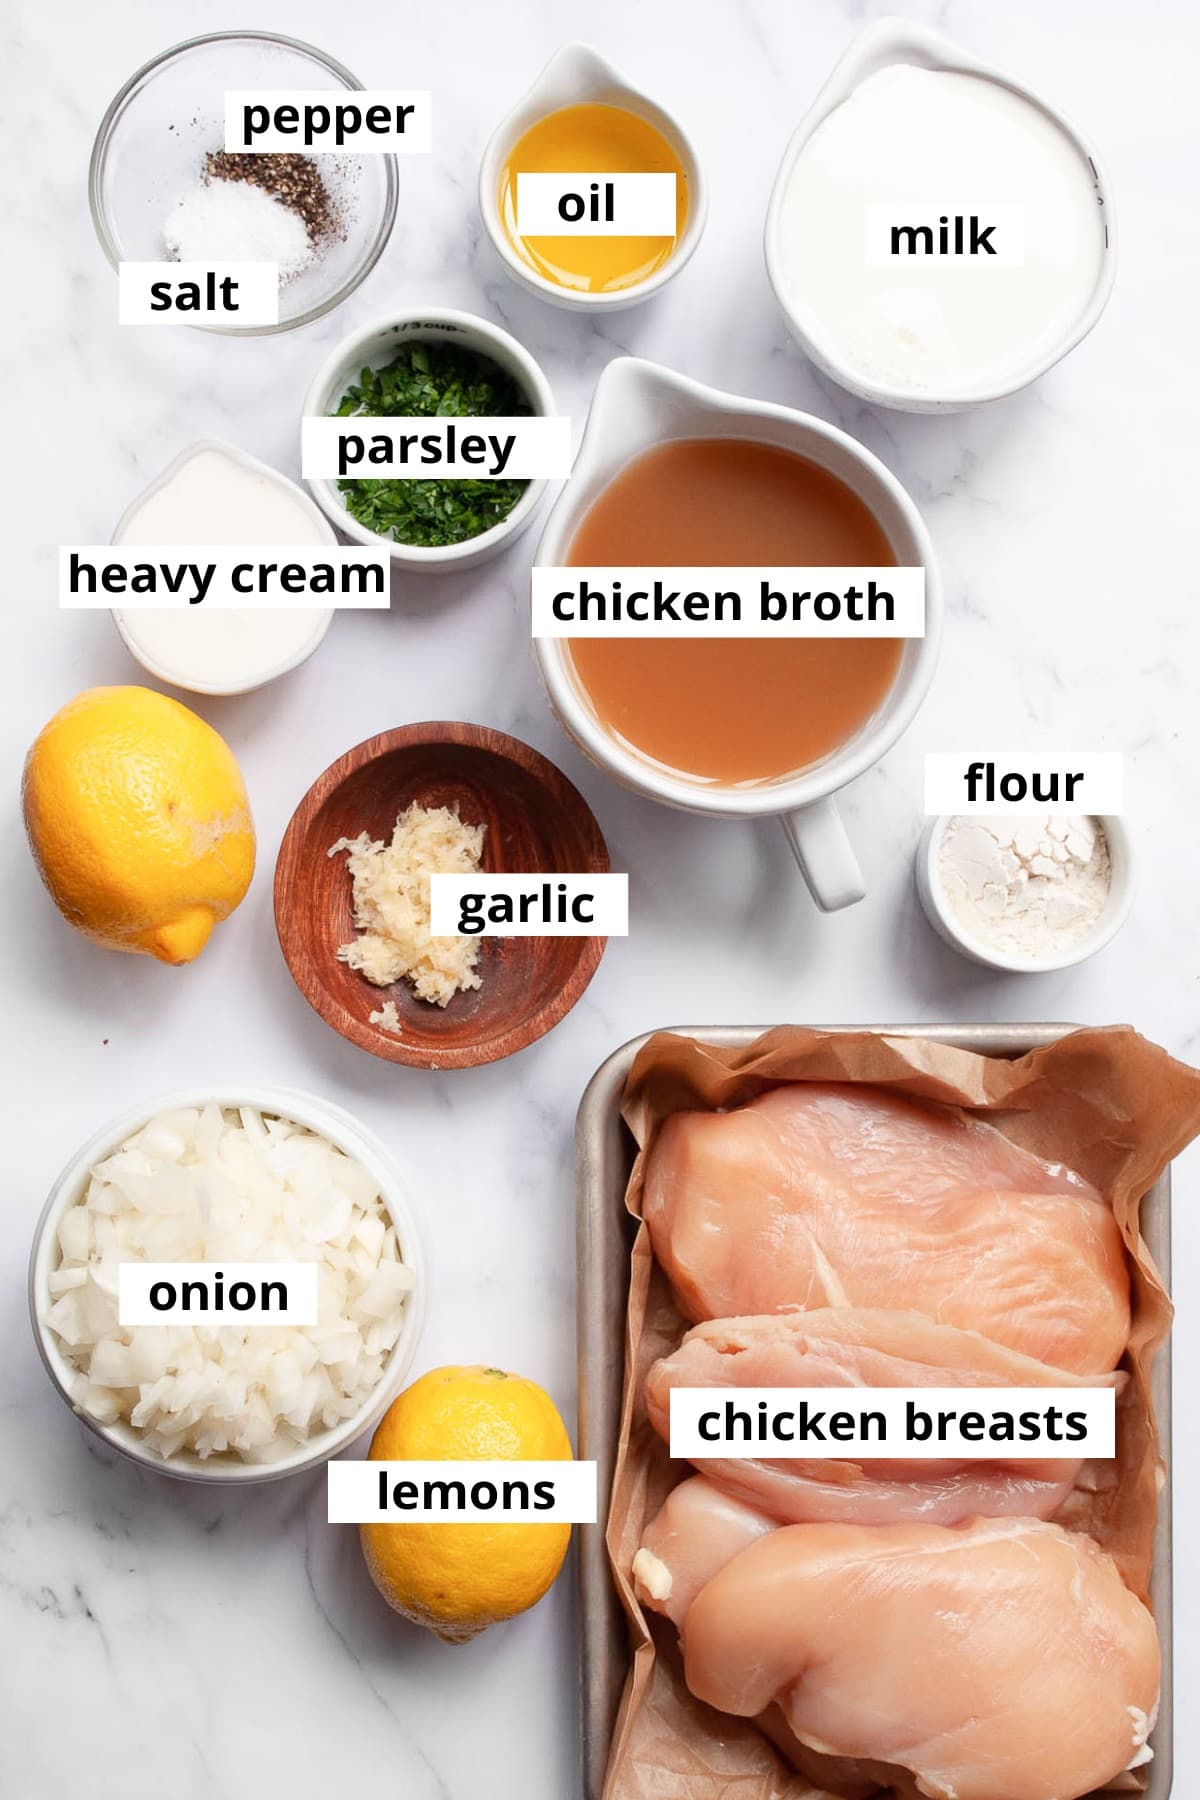 Chicken breasts, lemons, onion, garlic, flour, chicken broth, heavy cream, milk, parsley, oil, salt and pepper.